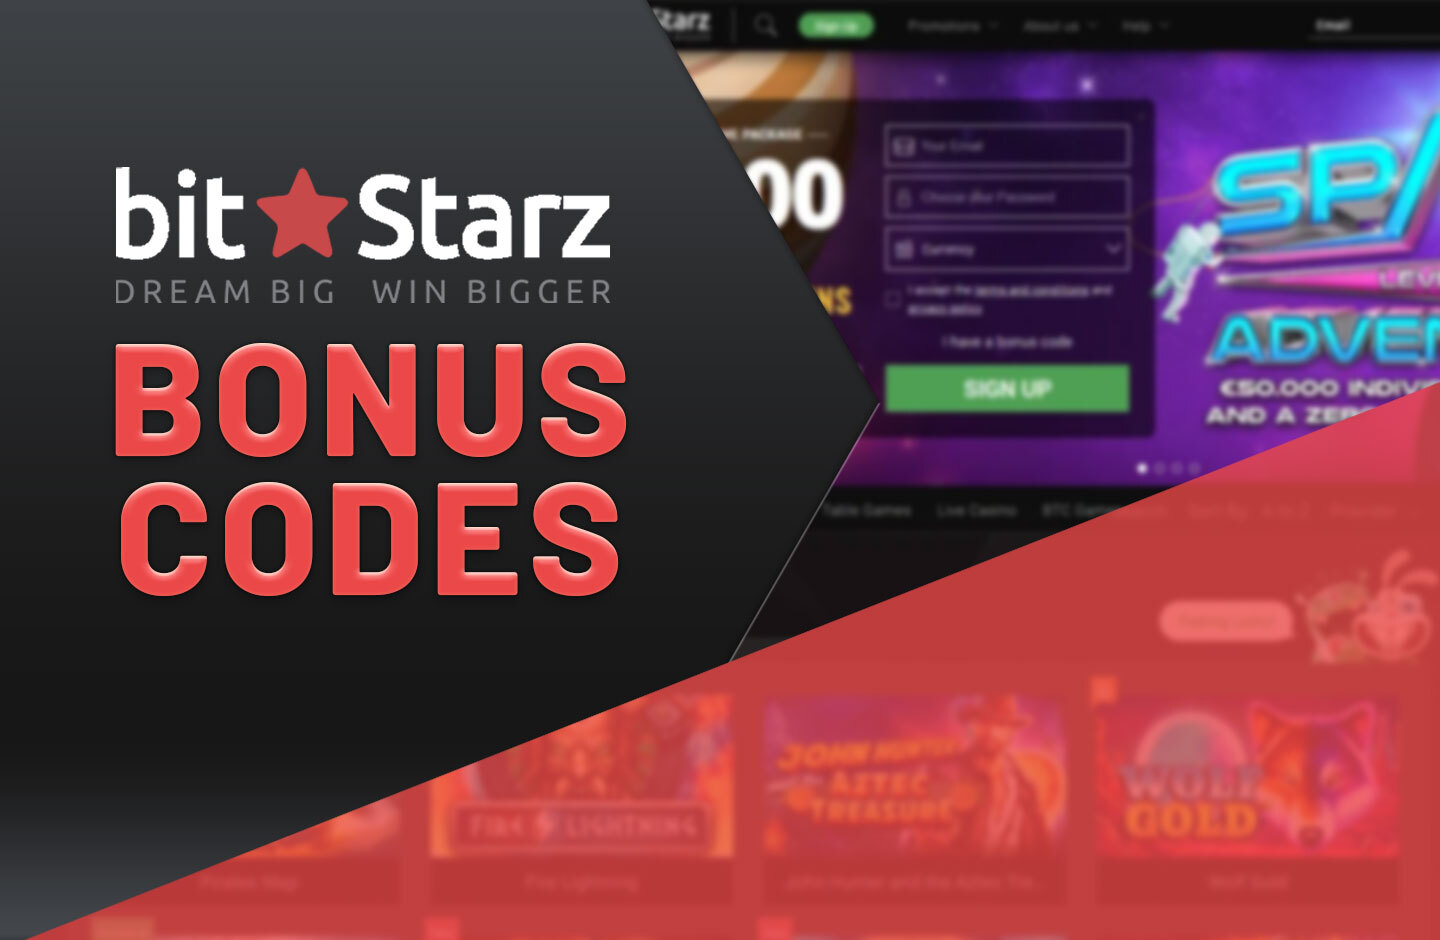 Unlock the Fun: Get Your Free Sign-Up Bonuses, No Deposit Free Bonus Spins,  and Thrilling Free Bonus Casino Games in India Today